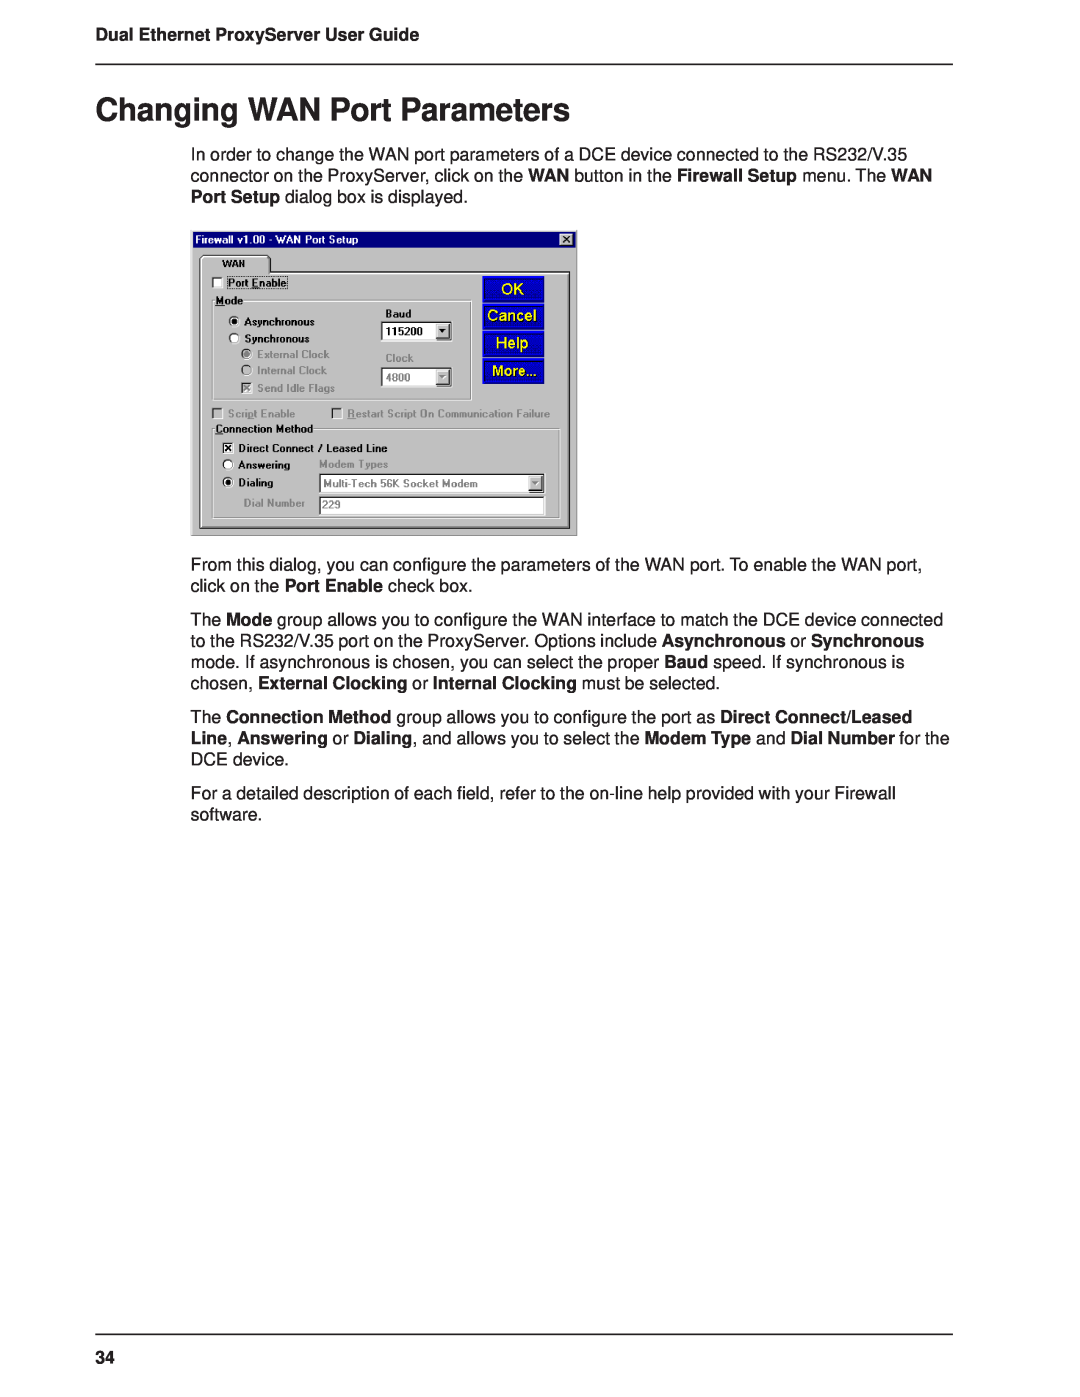 Multitech MTPSR1-120 manual Changing WAN Port Parameters, Dual Ethernet ProxyServer User Guide 